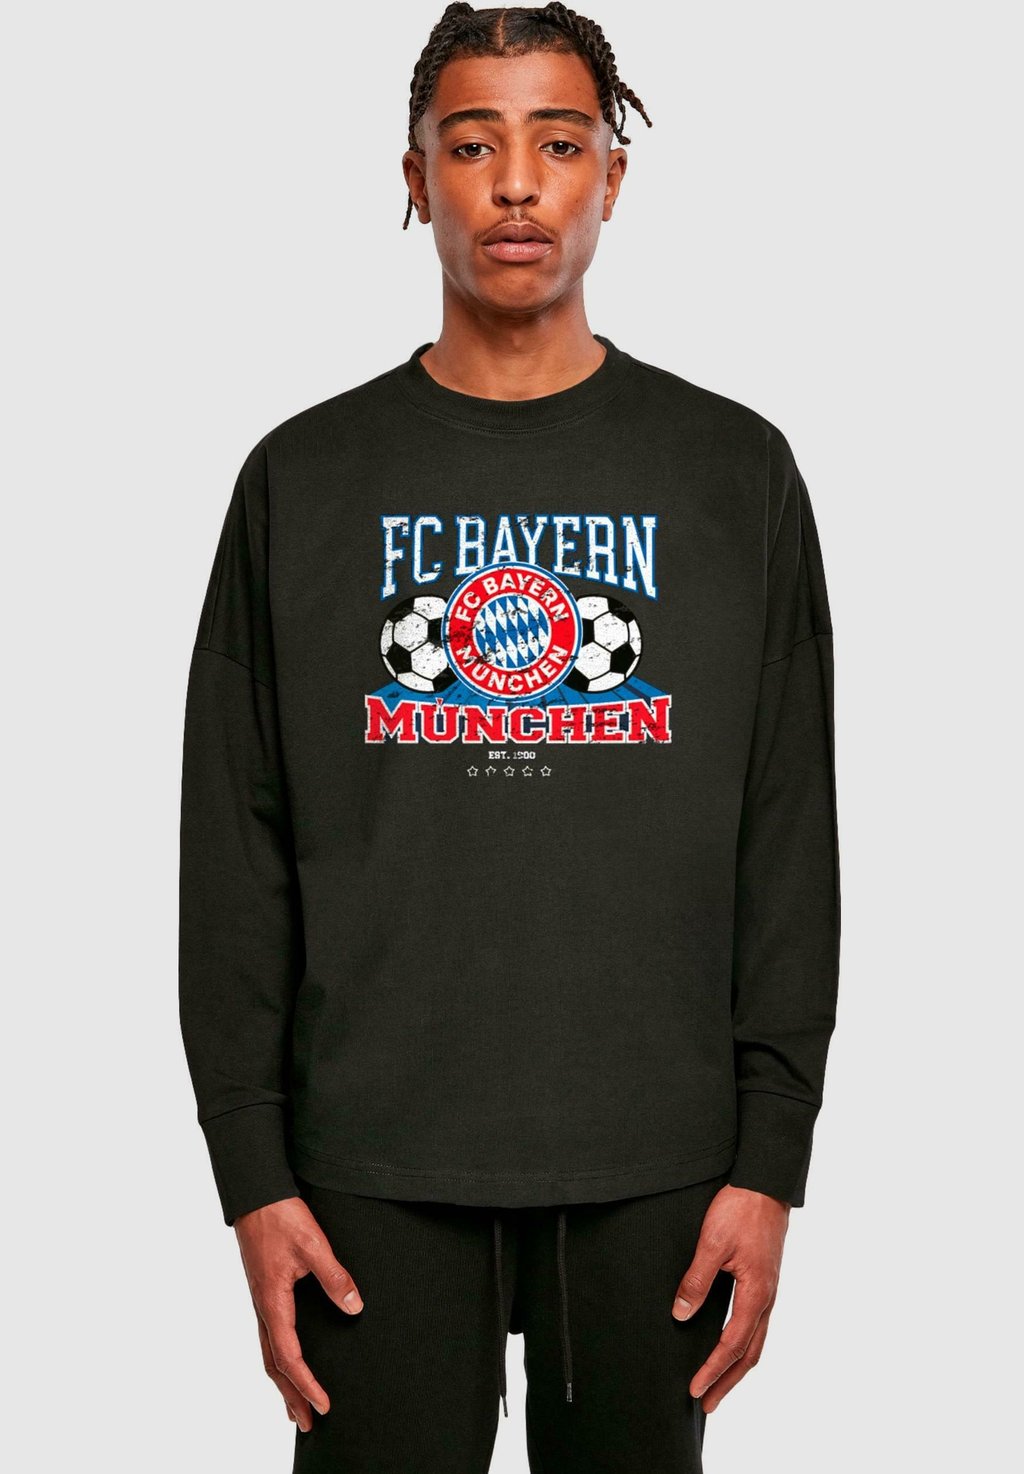 Team Футболка FC BAYERN MÜNCHEN 2 с длинными рукавами FC Bayern München, черный